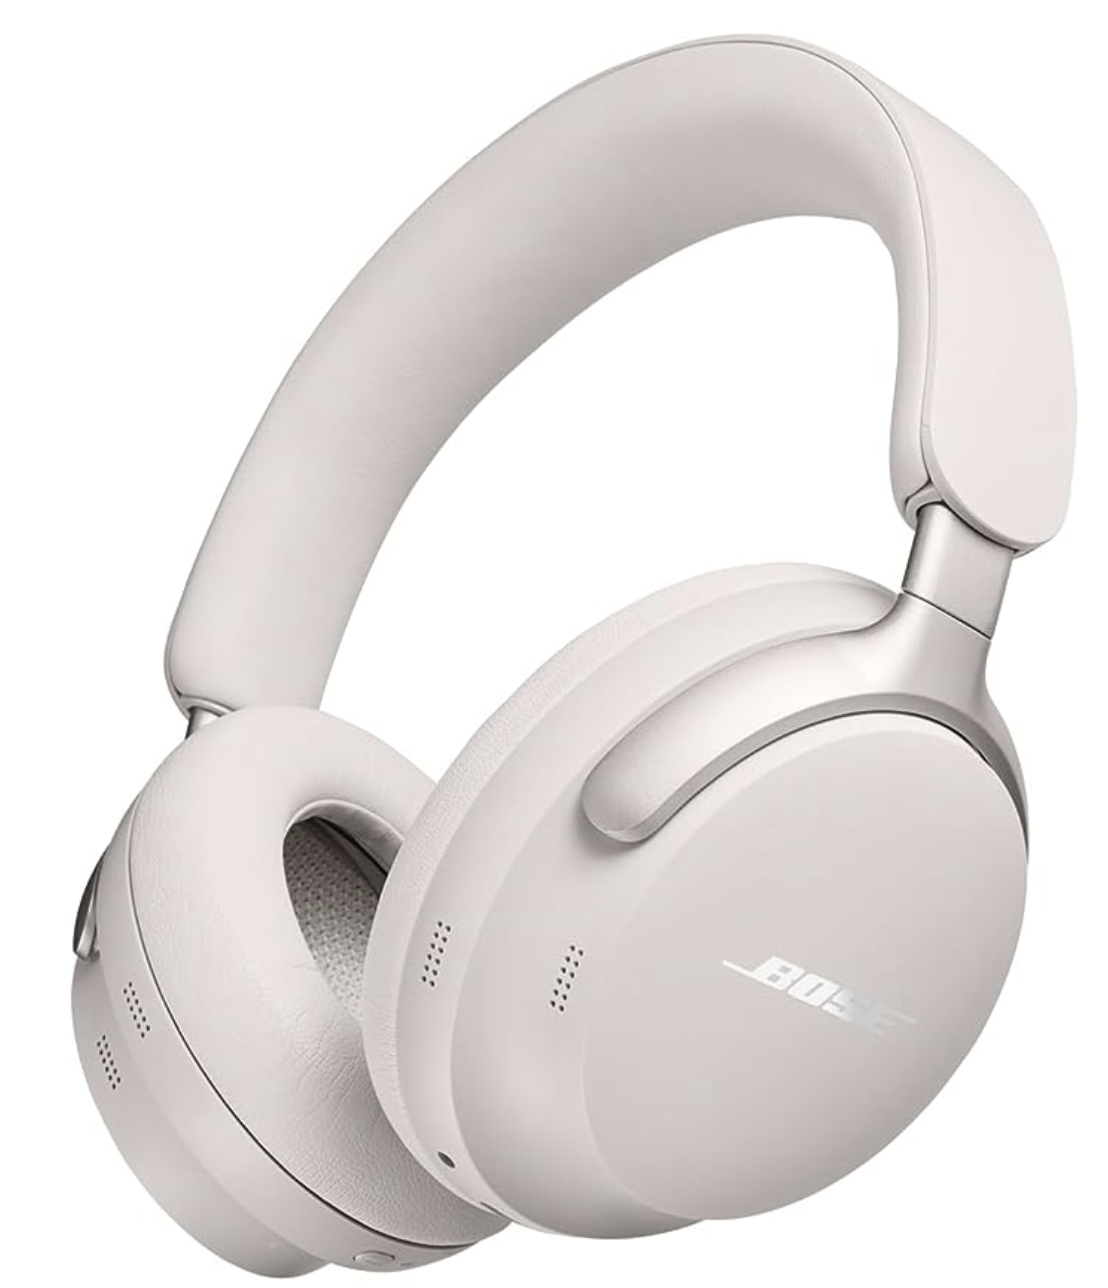 a pair of white headphones